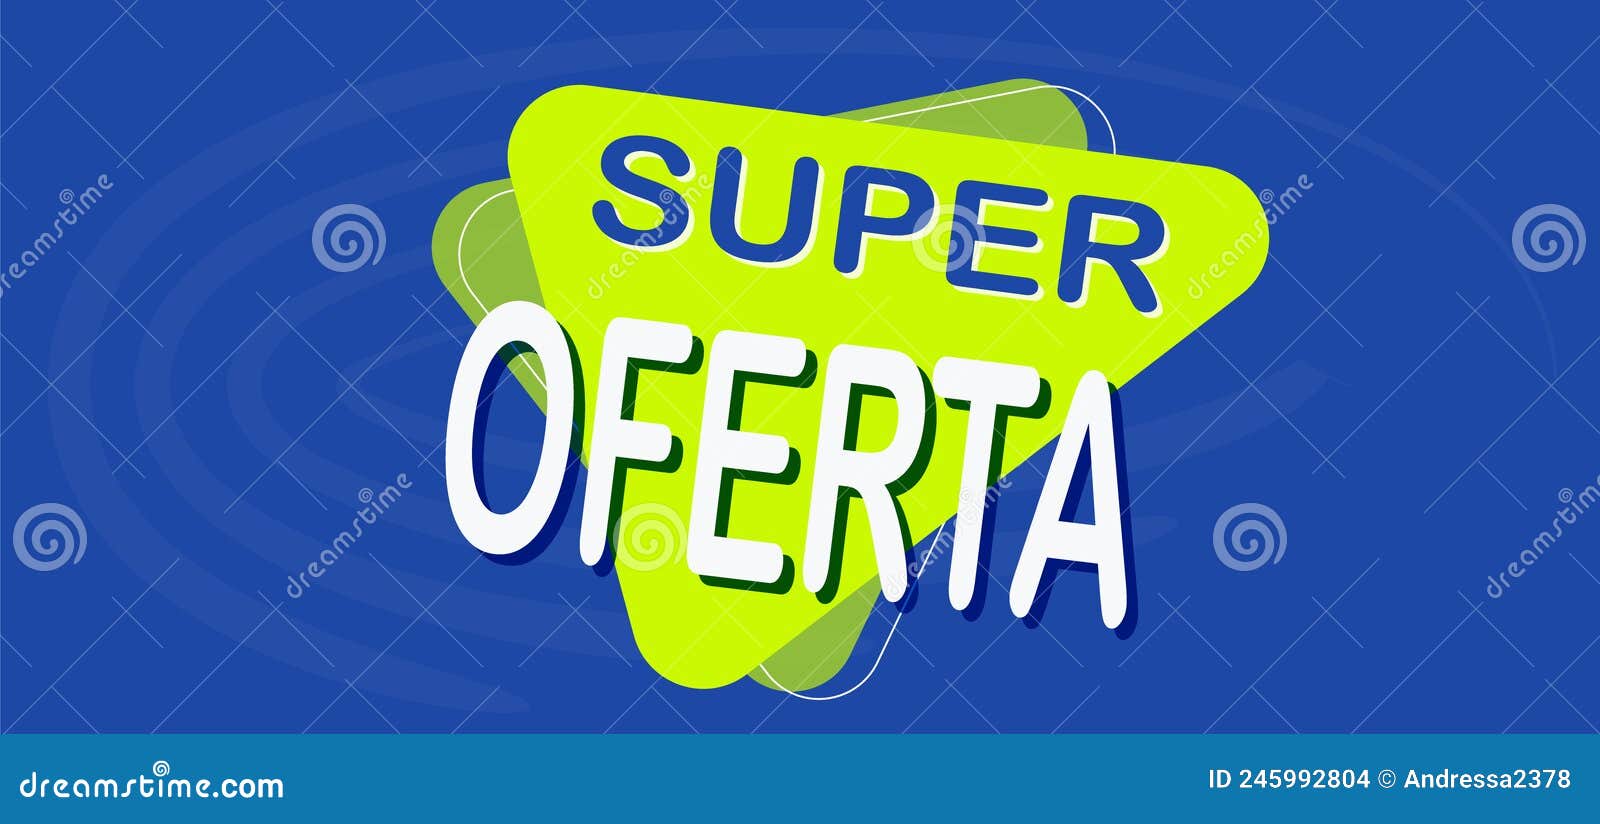 super offer banner in portuguese 